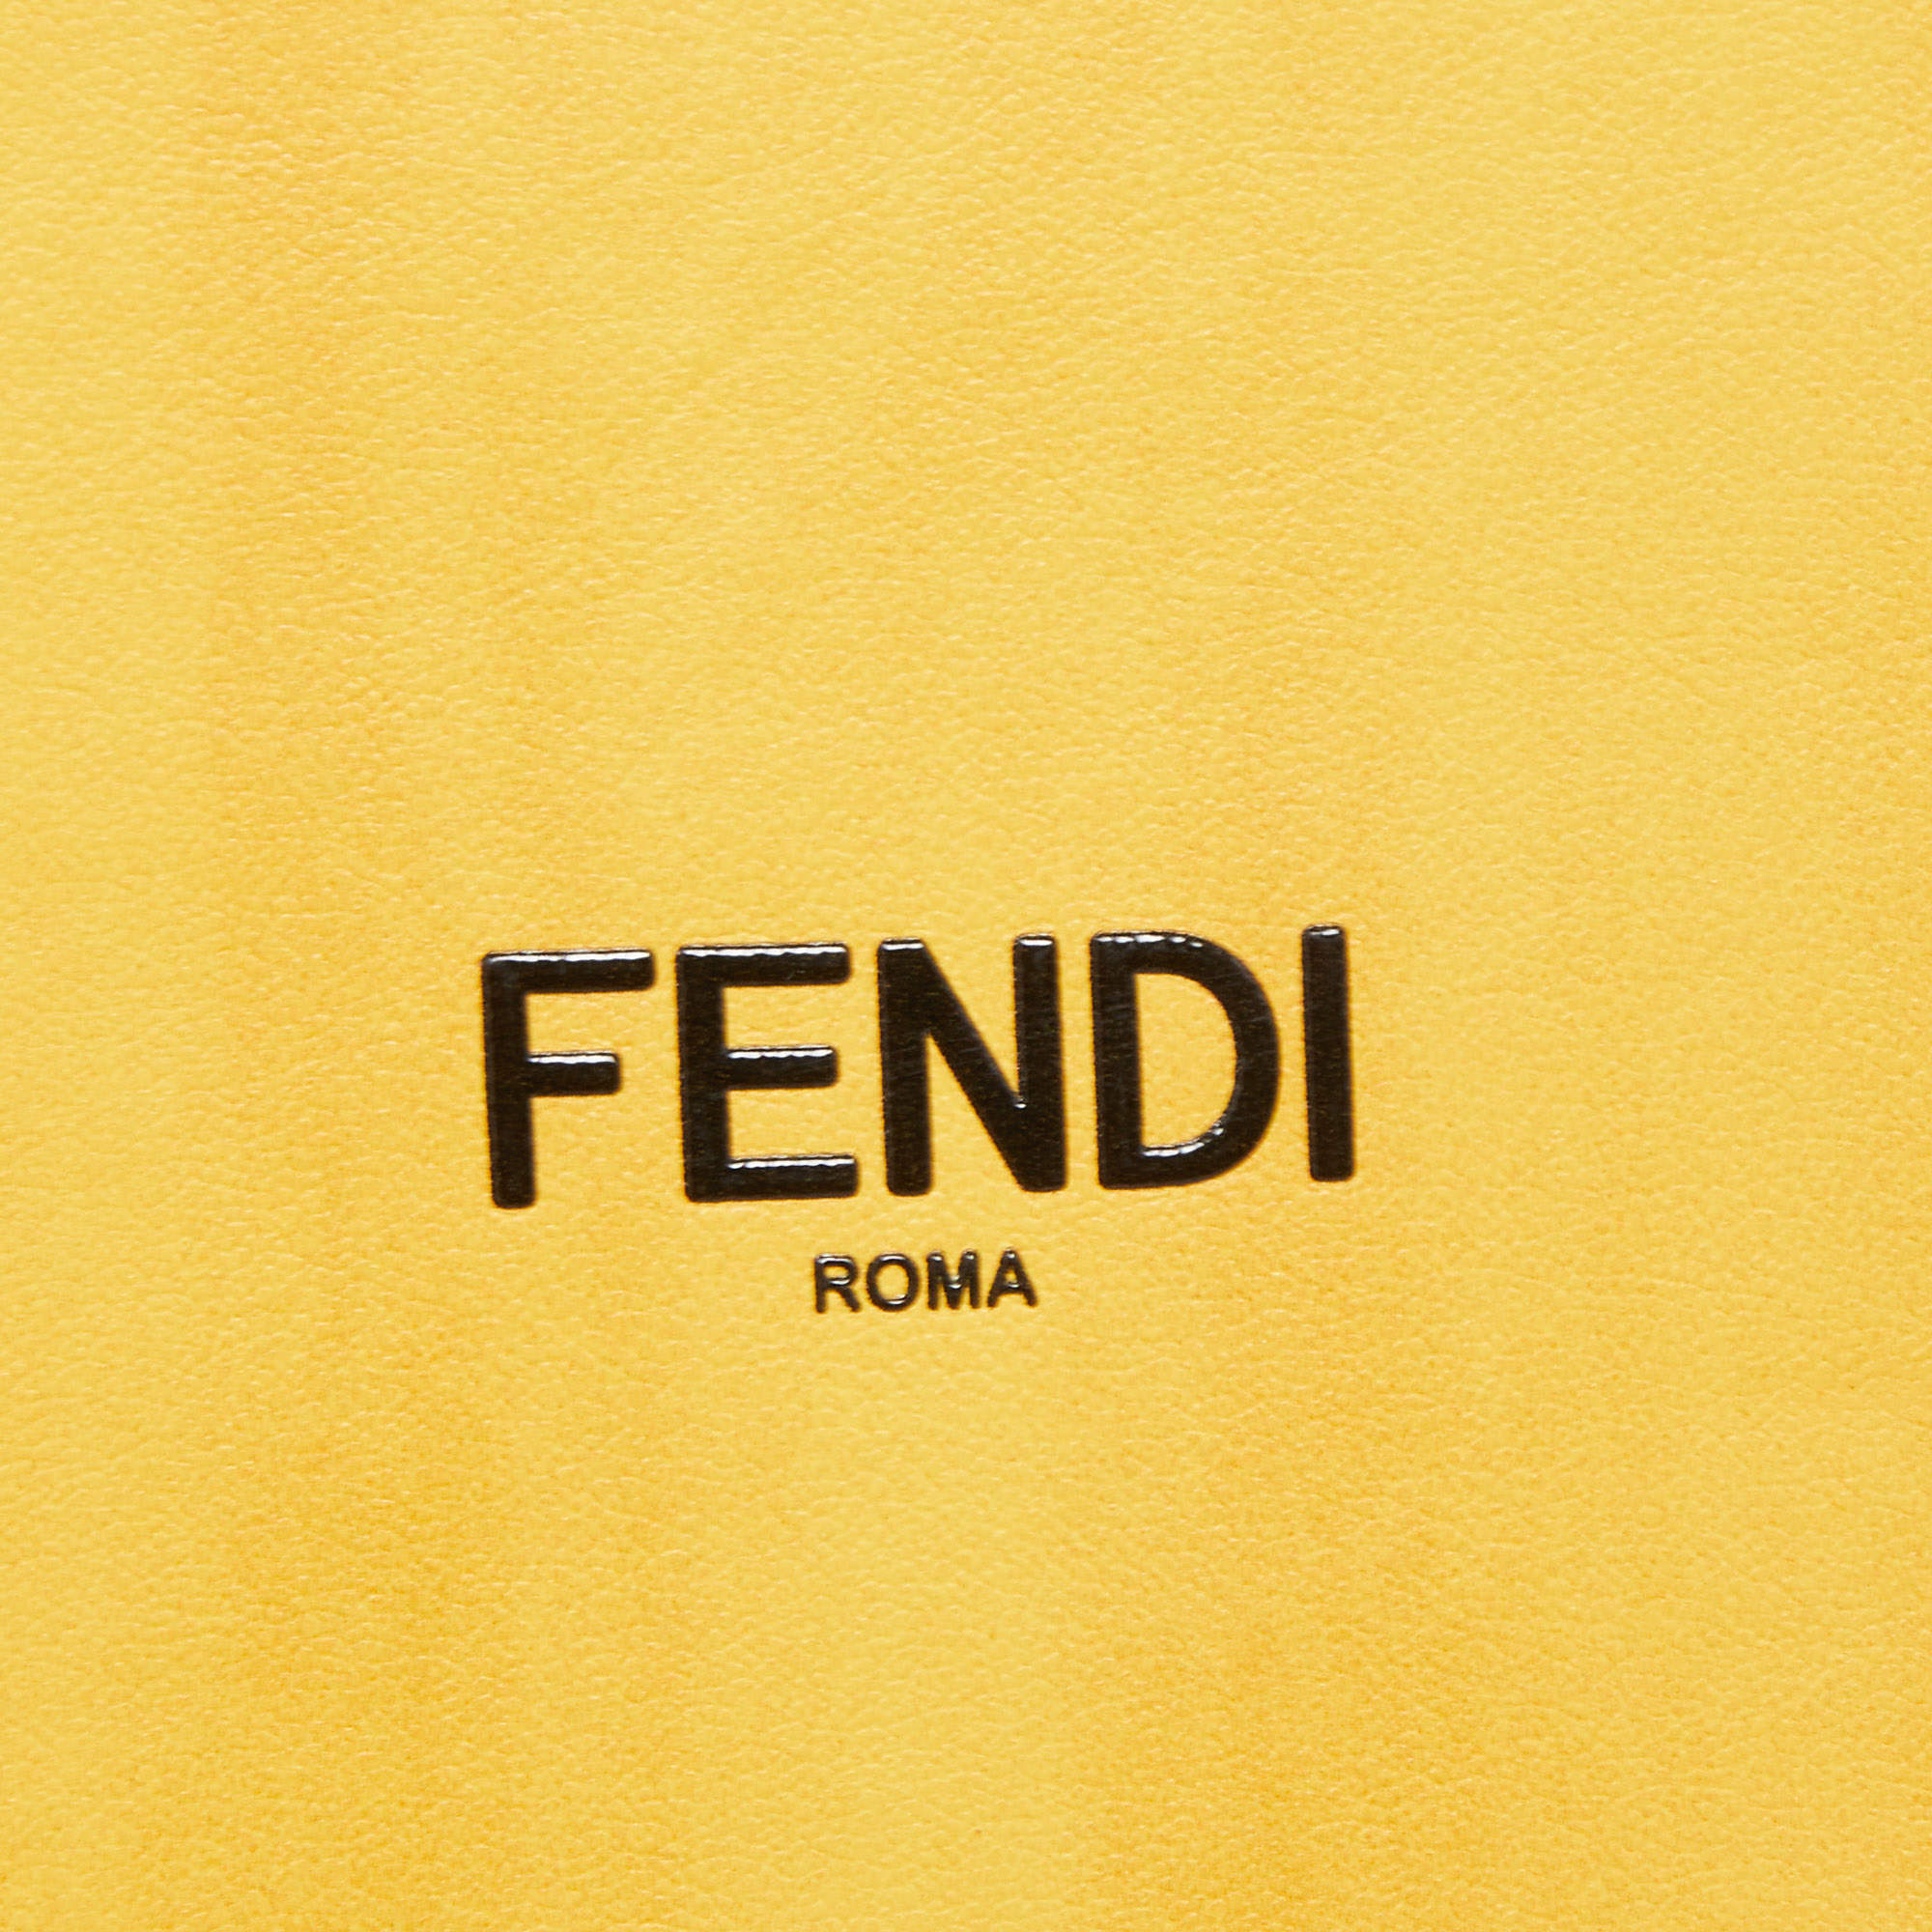 FENDI Vertical Box signature yellow black crossbody structured bag